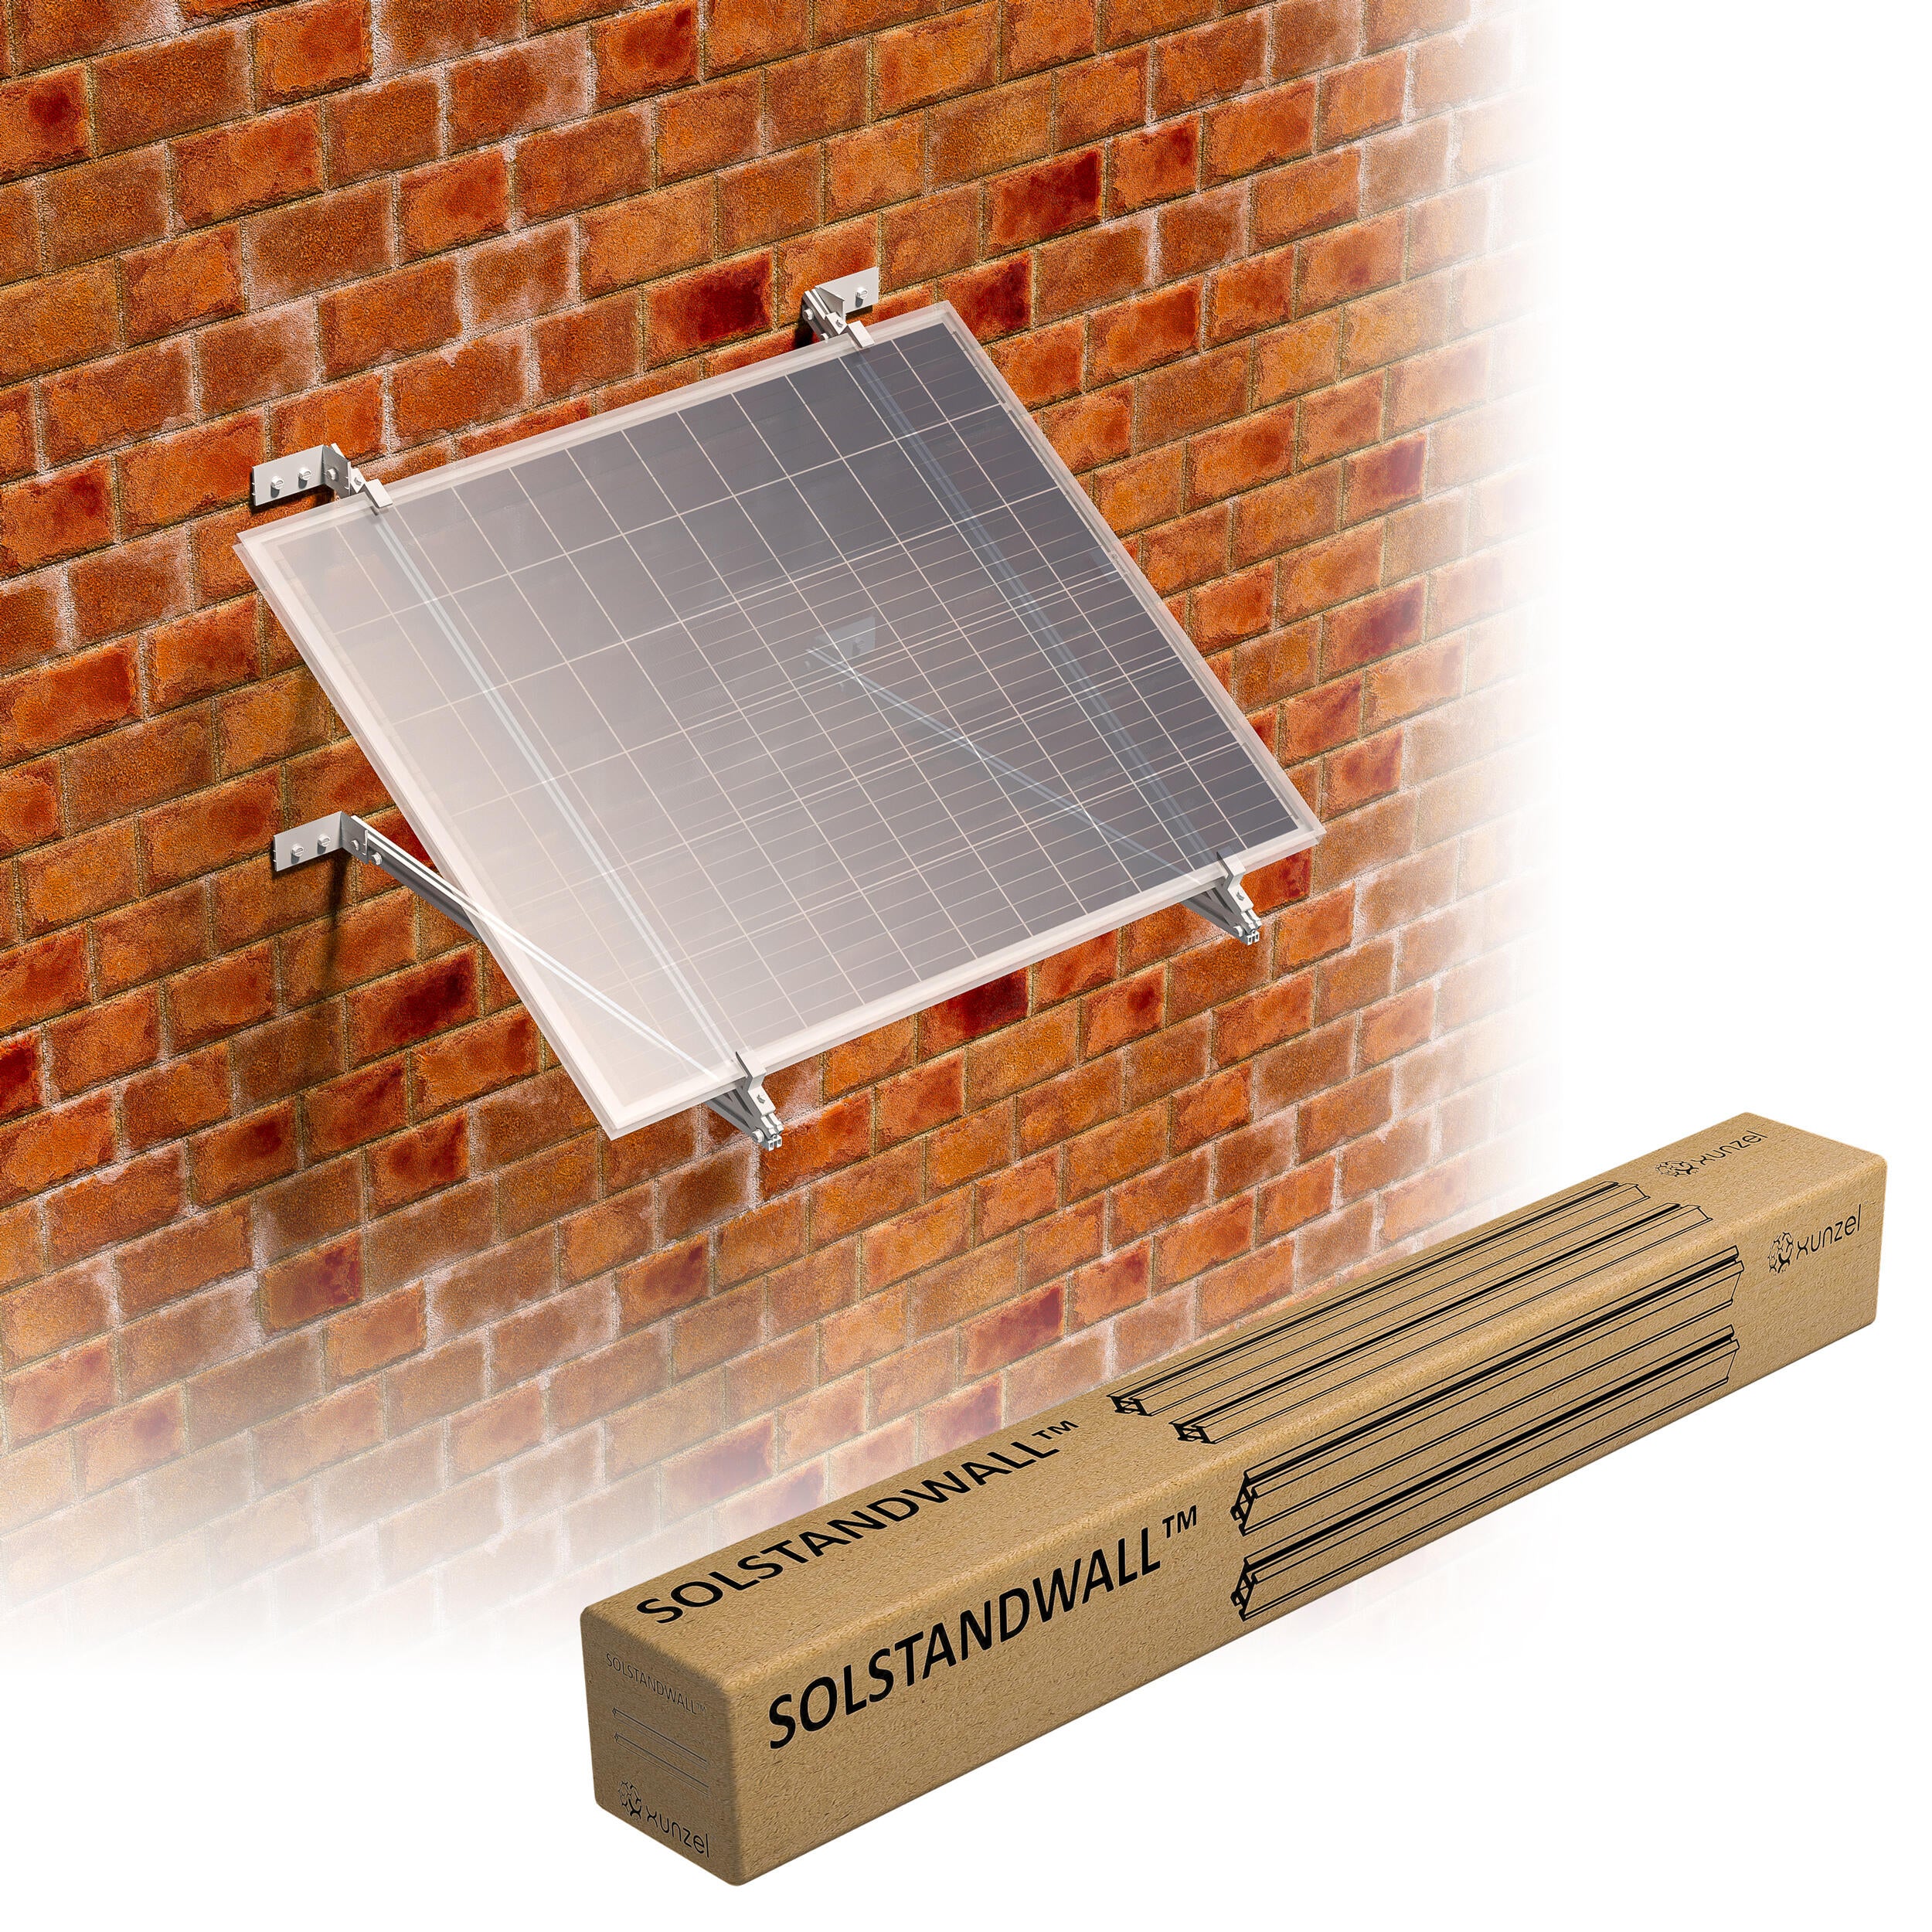 Soporte pared/suelo xunzel solstandwall-xl 1 panel solarpower-185/190w